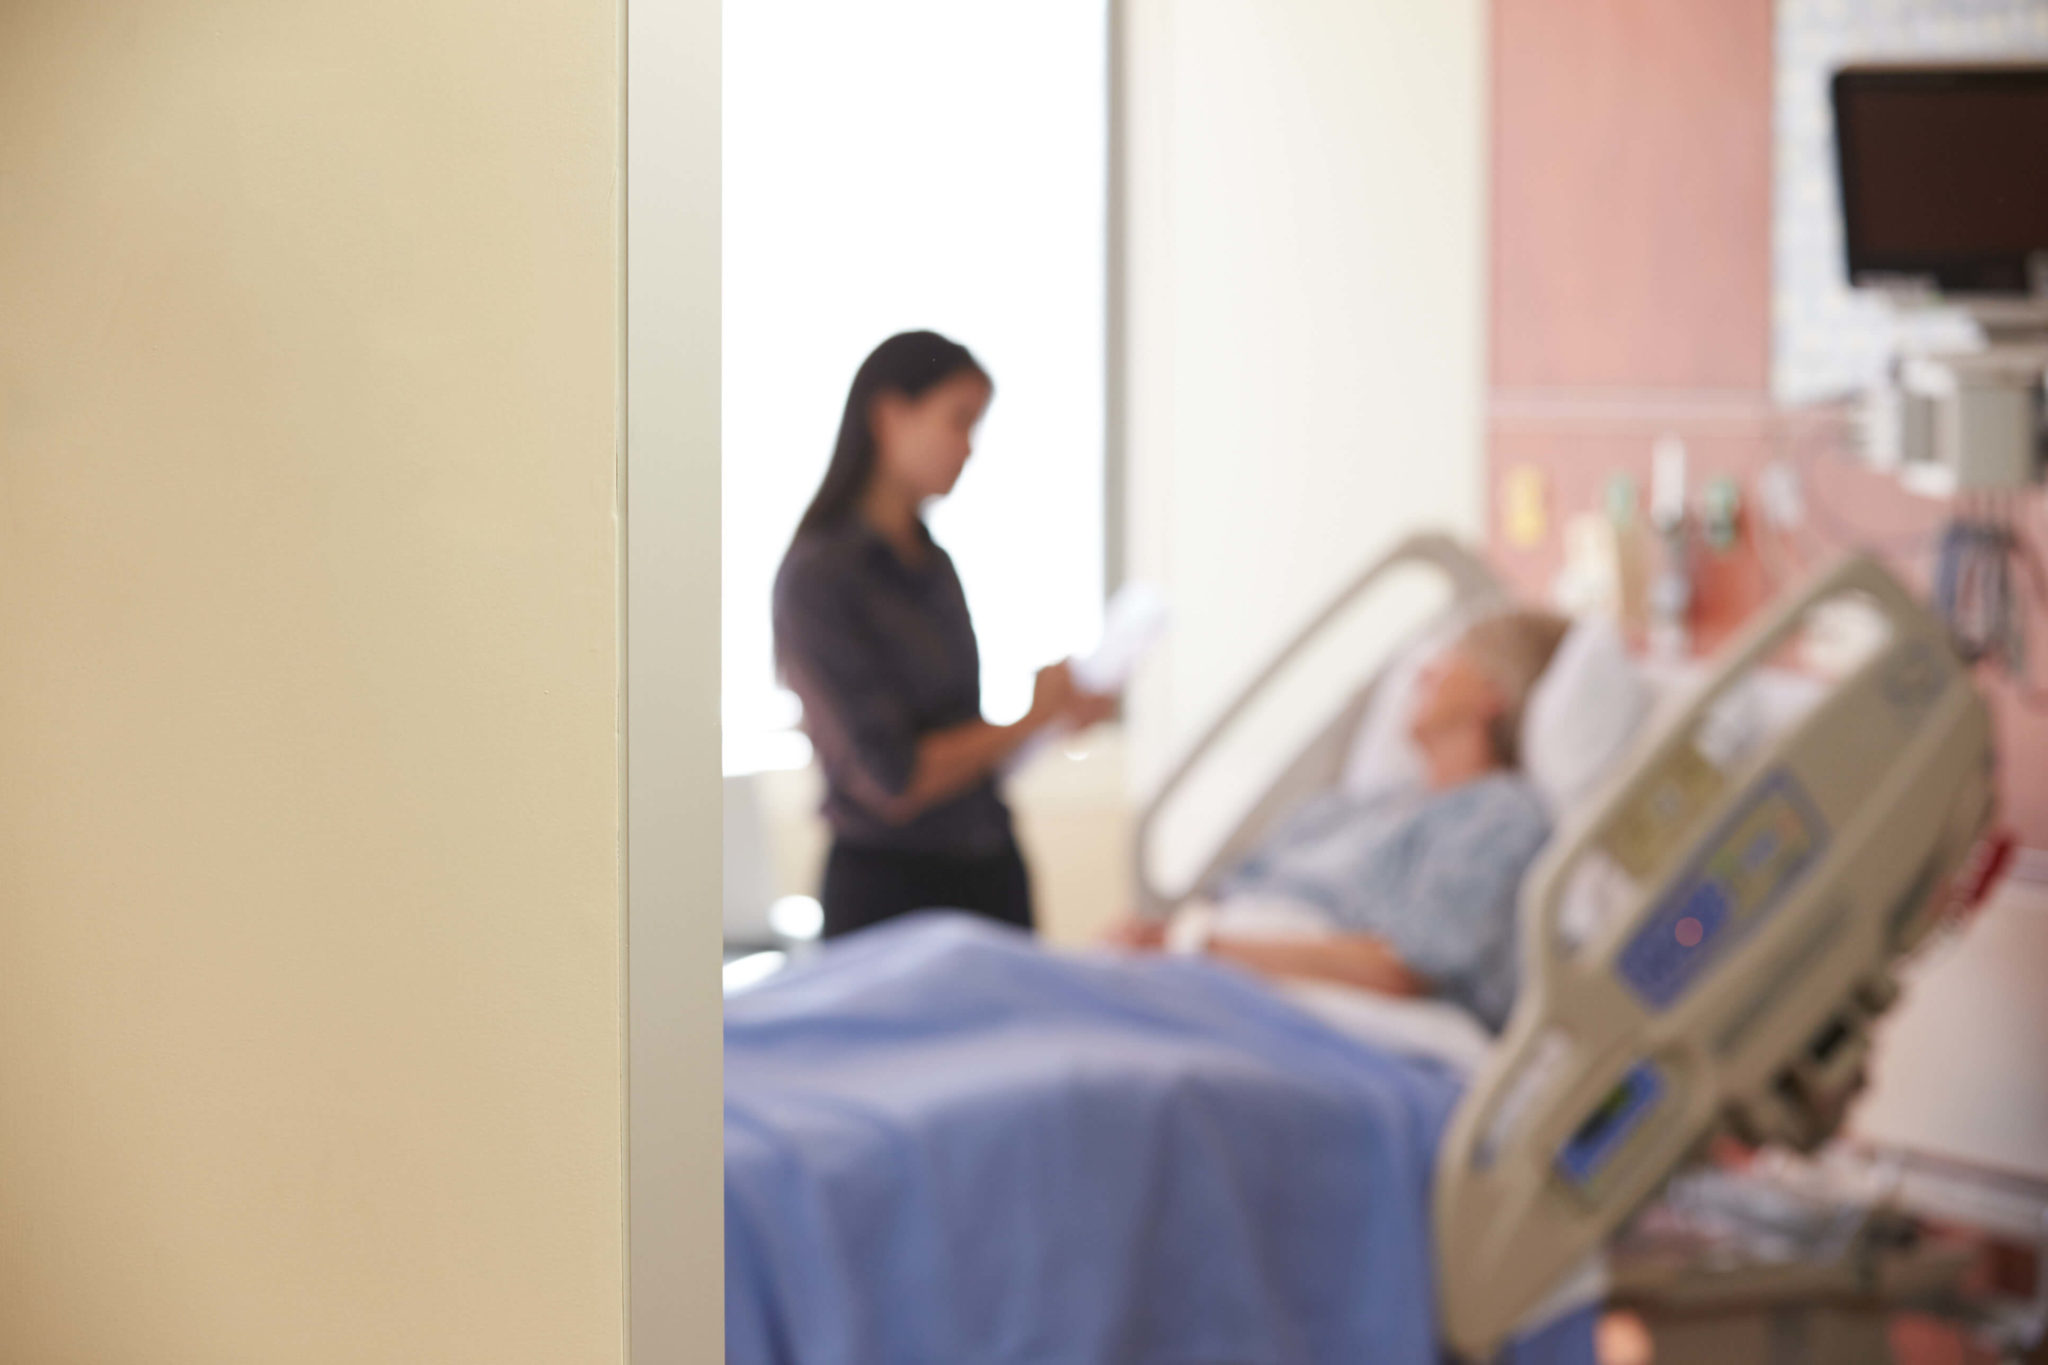 blurred hospital room